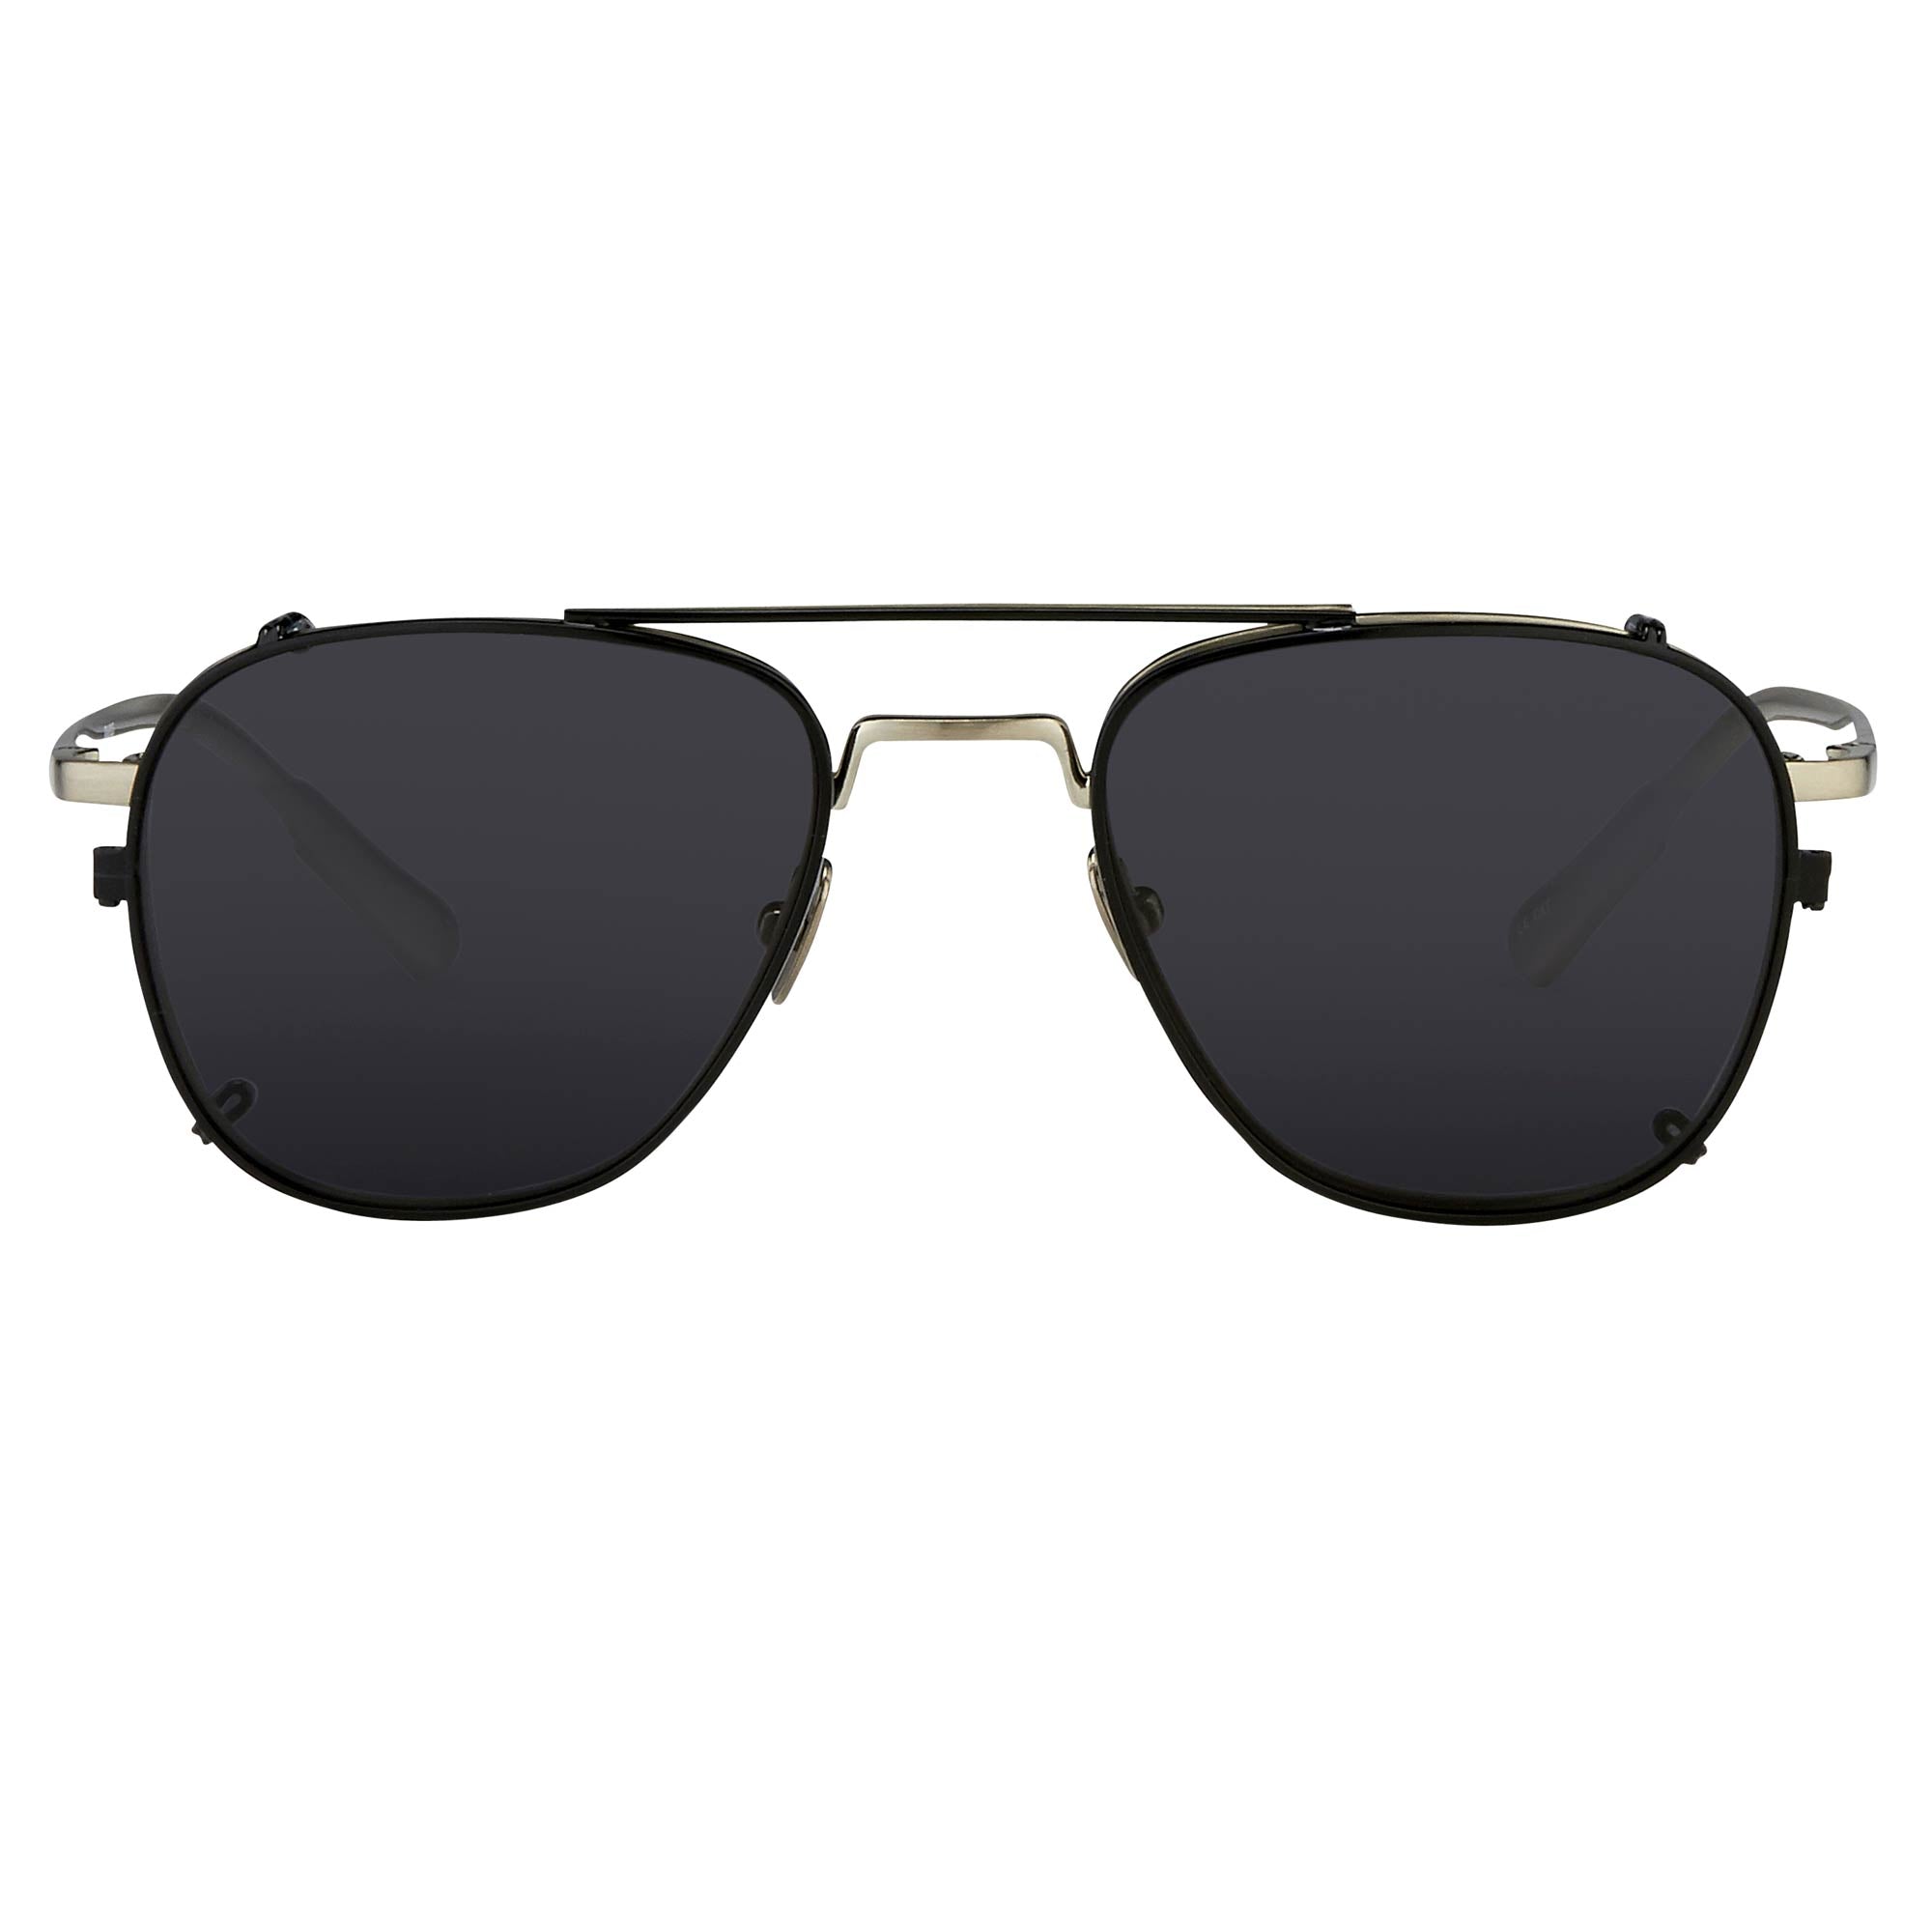 KRIS VAN ASSCHE Made In Japan Designer Sunglasses LINDA FARROW GALLERY  KVA/69/6 | eBay